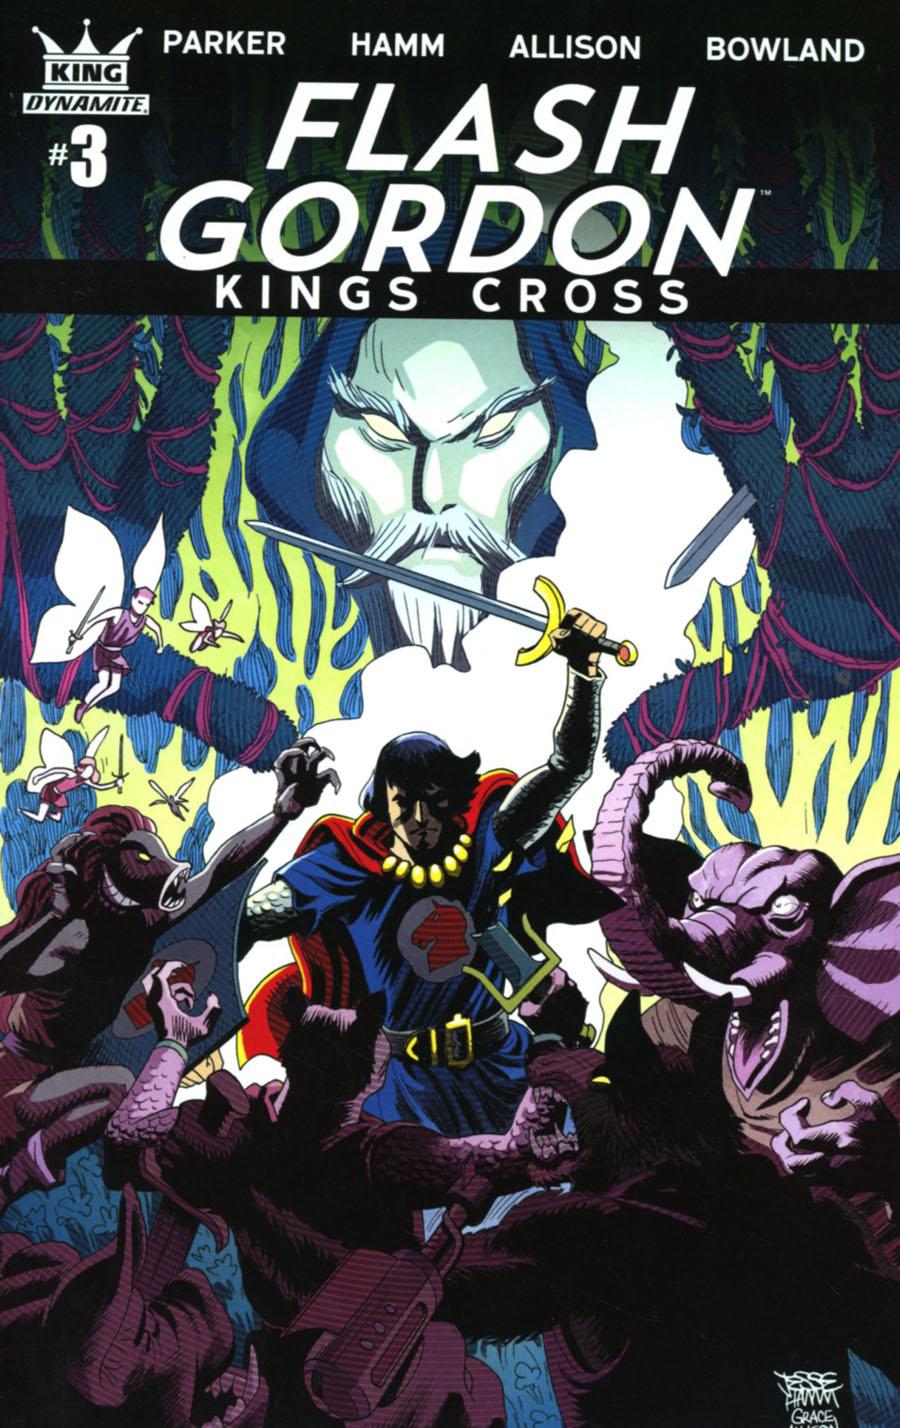 Flash Gordon Kings Cross Vol. 1 #3